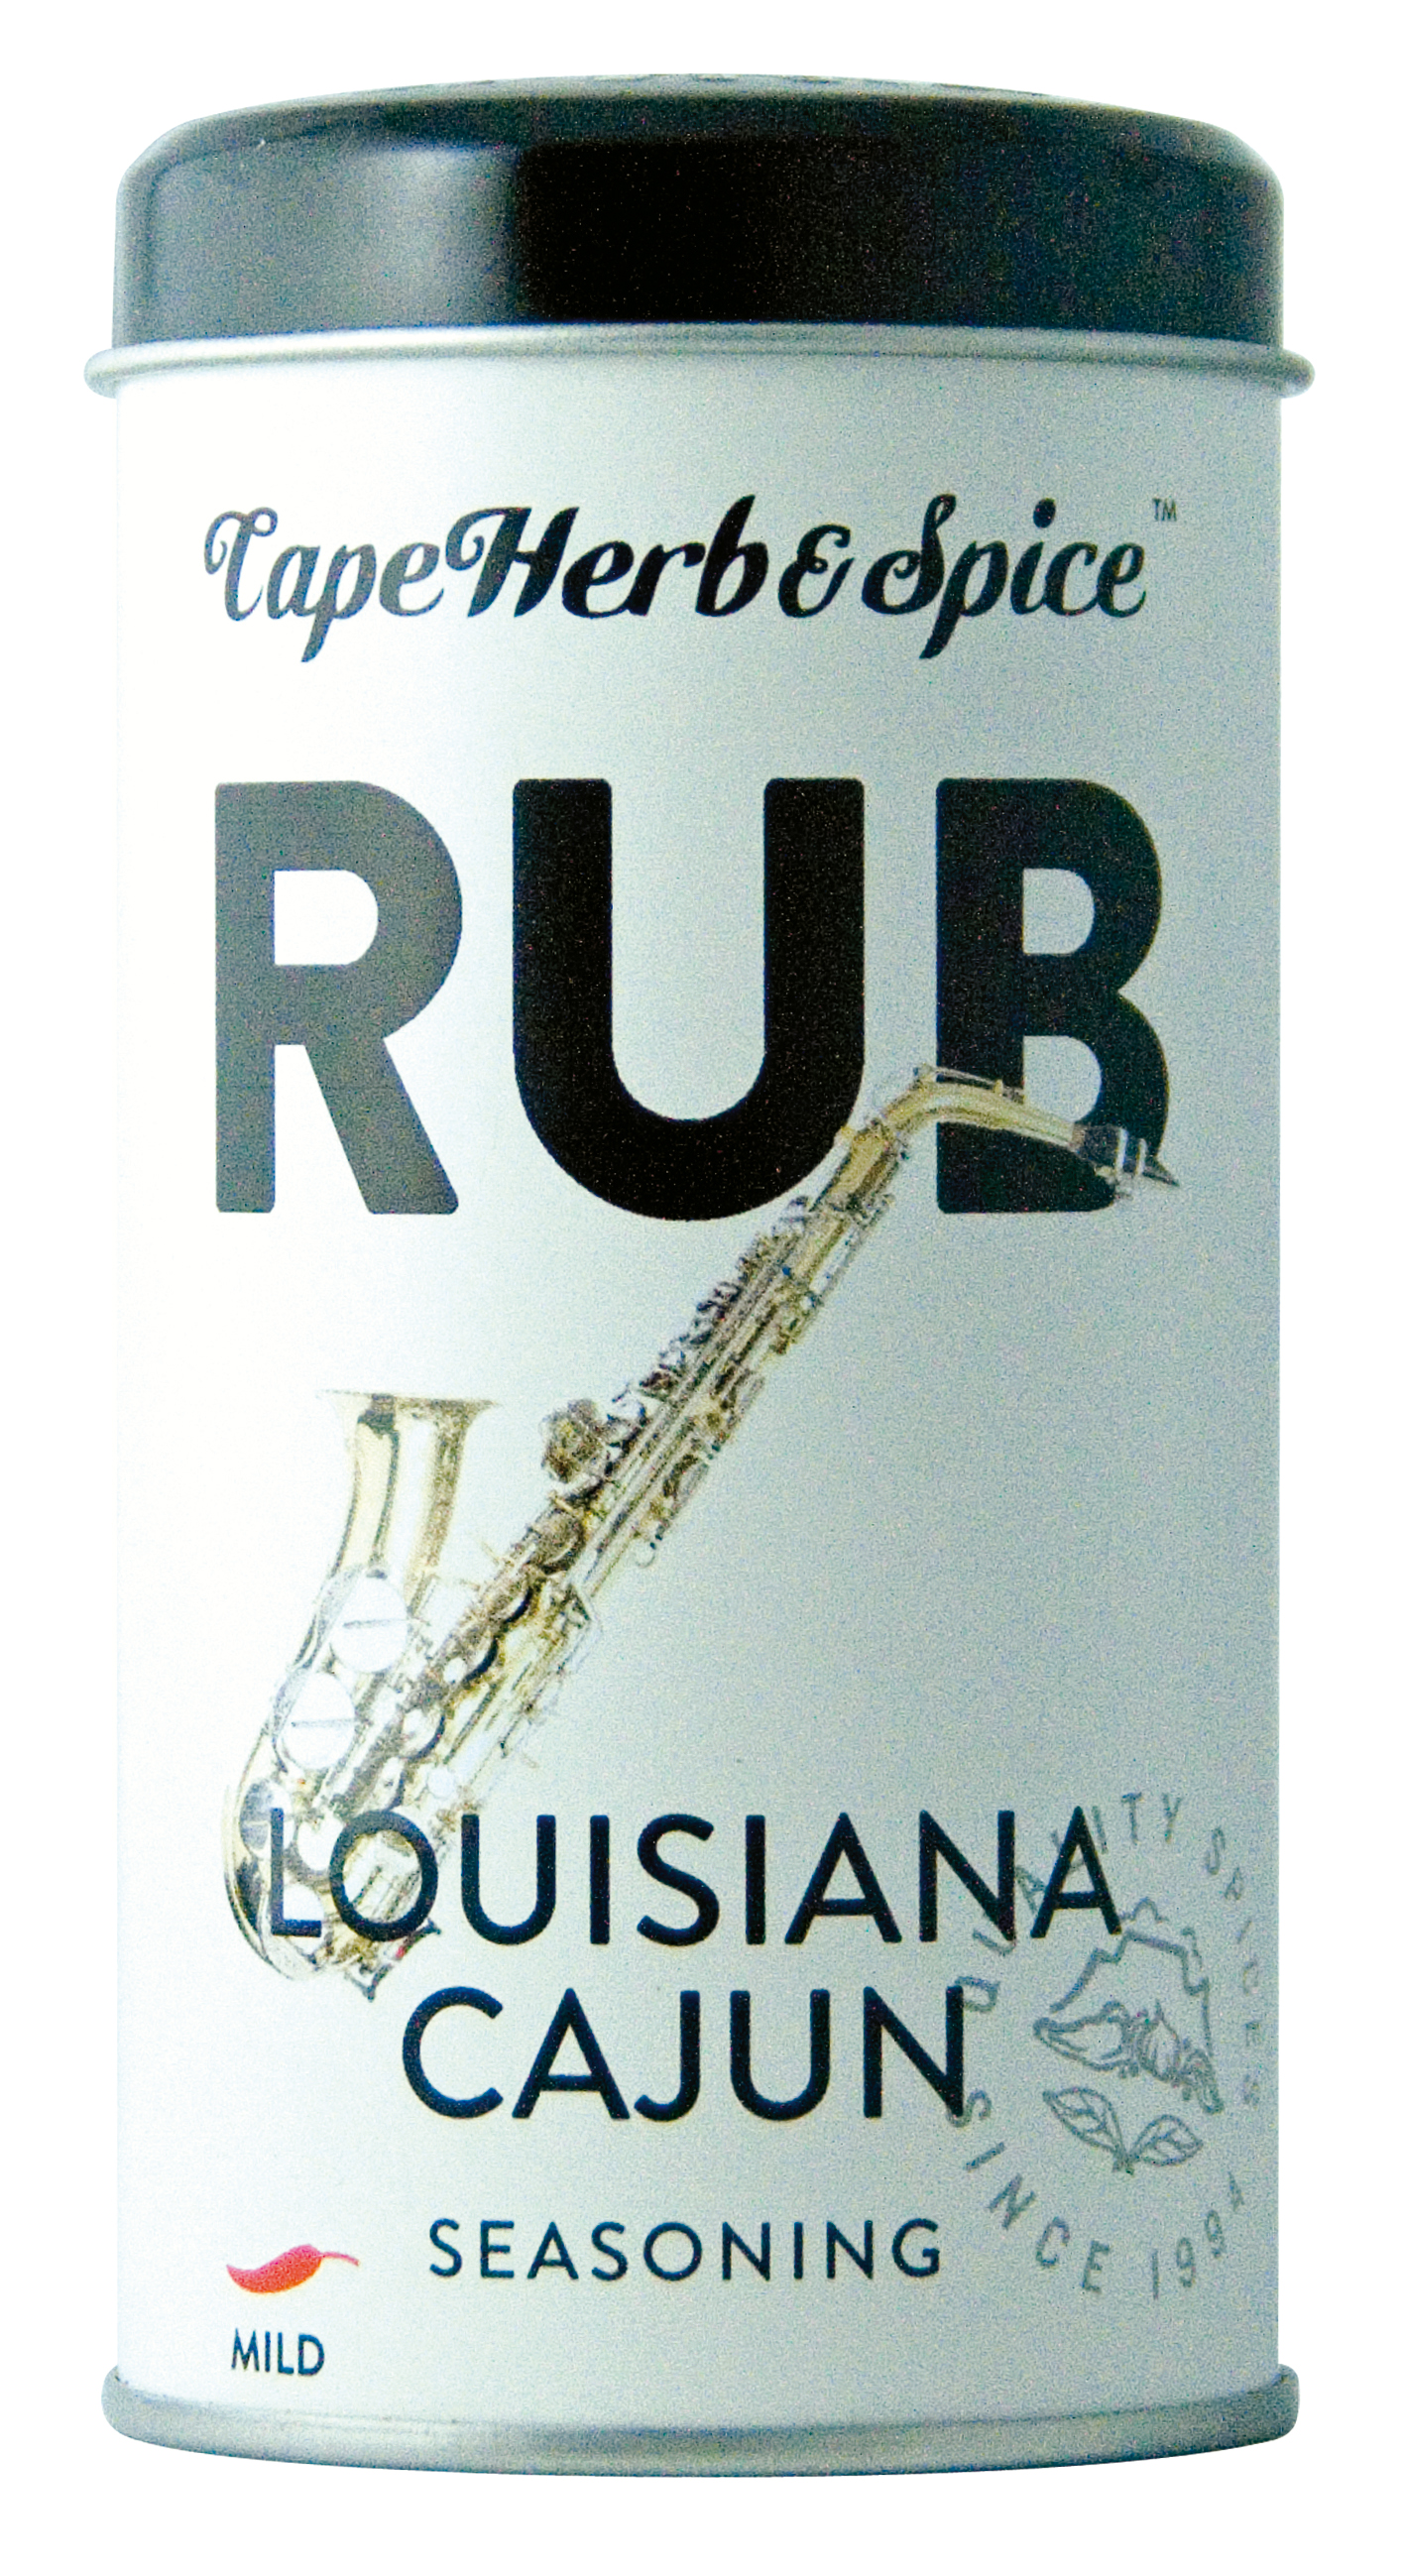 Cape Herb Rub Louisiana Cajun 100g